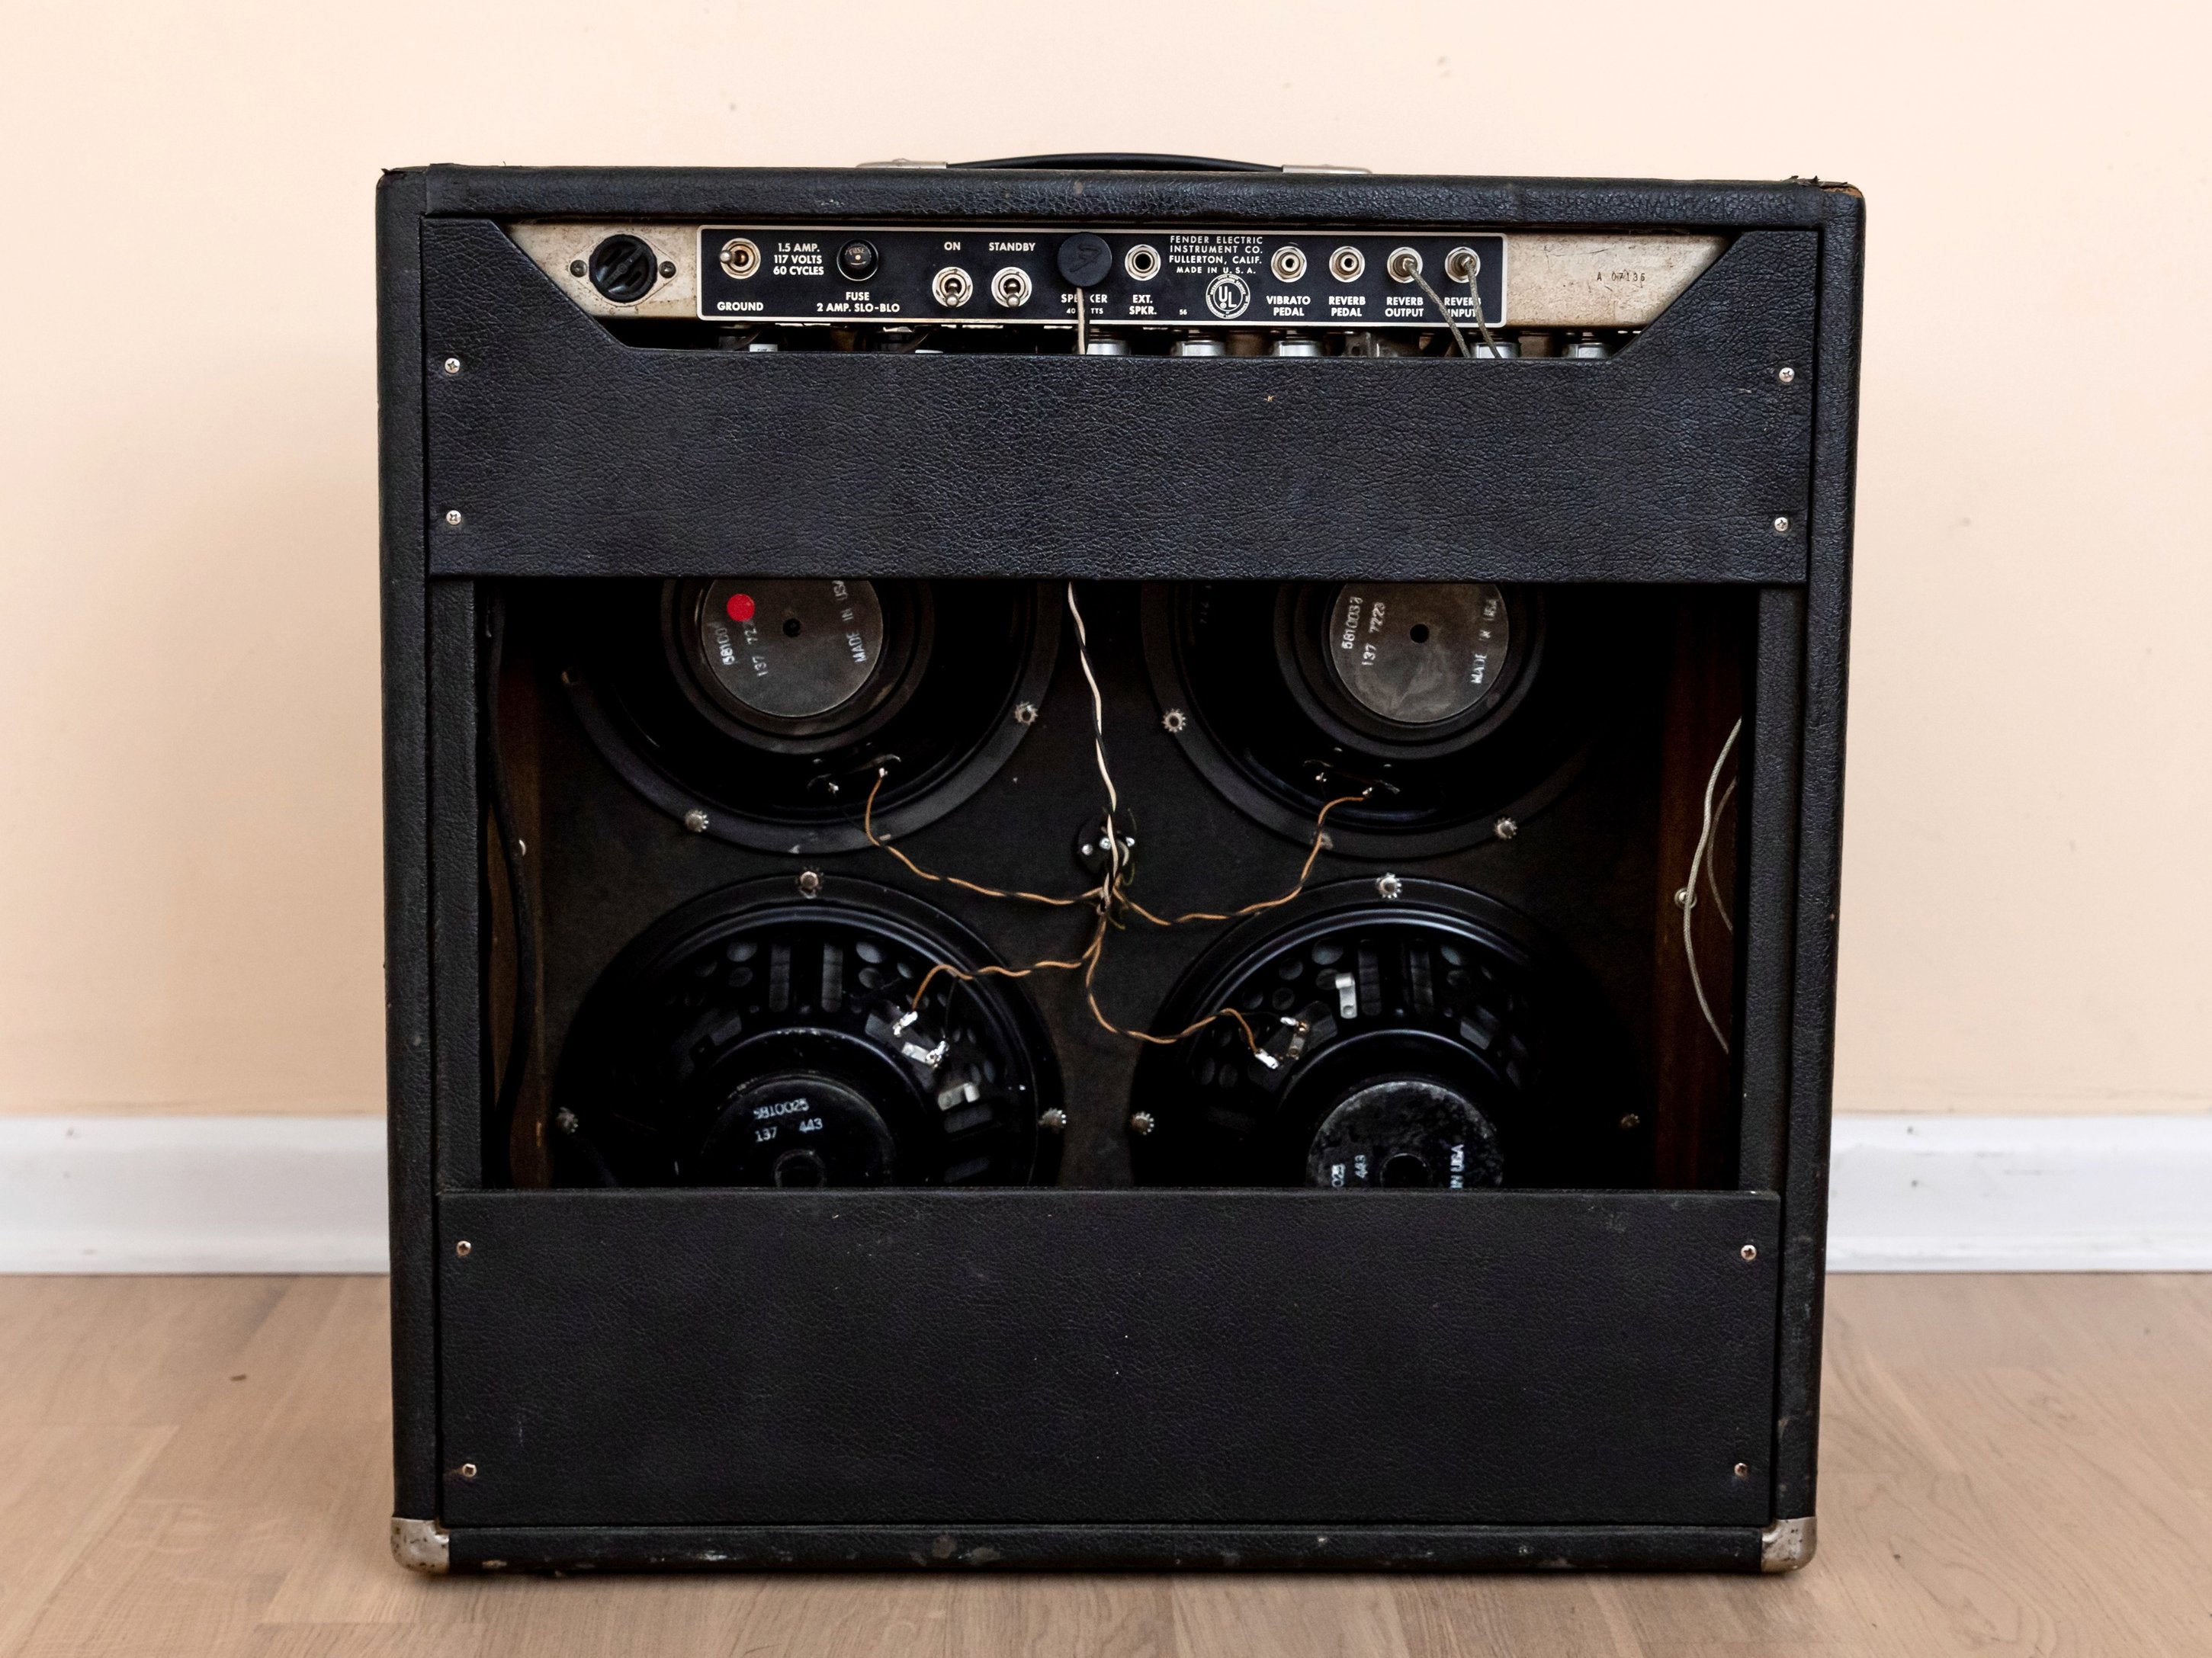 1965 Fender Super Reverb Black Panel Vintage Tube Amp AB763 w/ Ceramic Speakers, FEIC